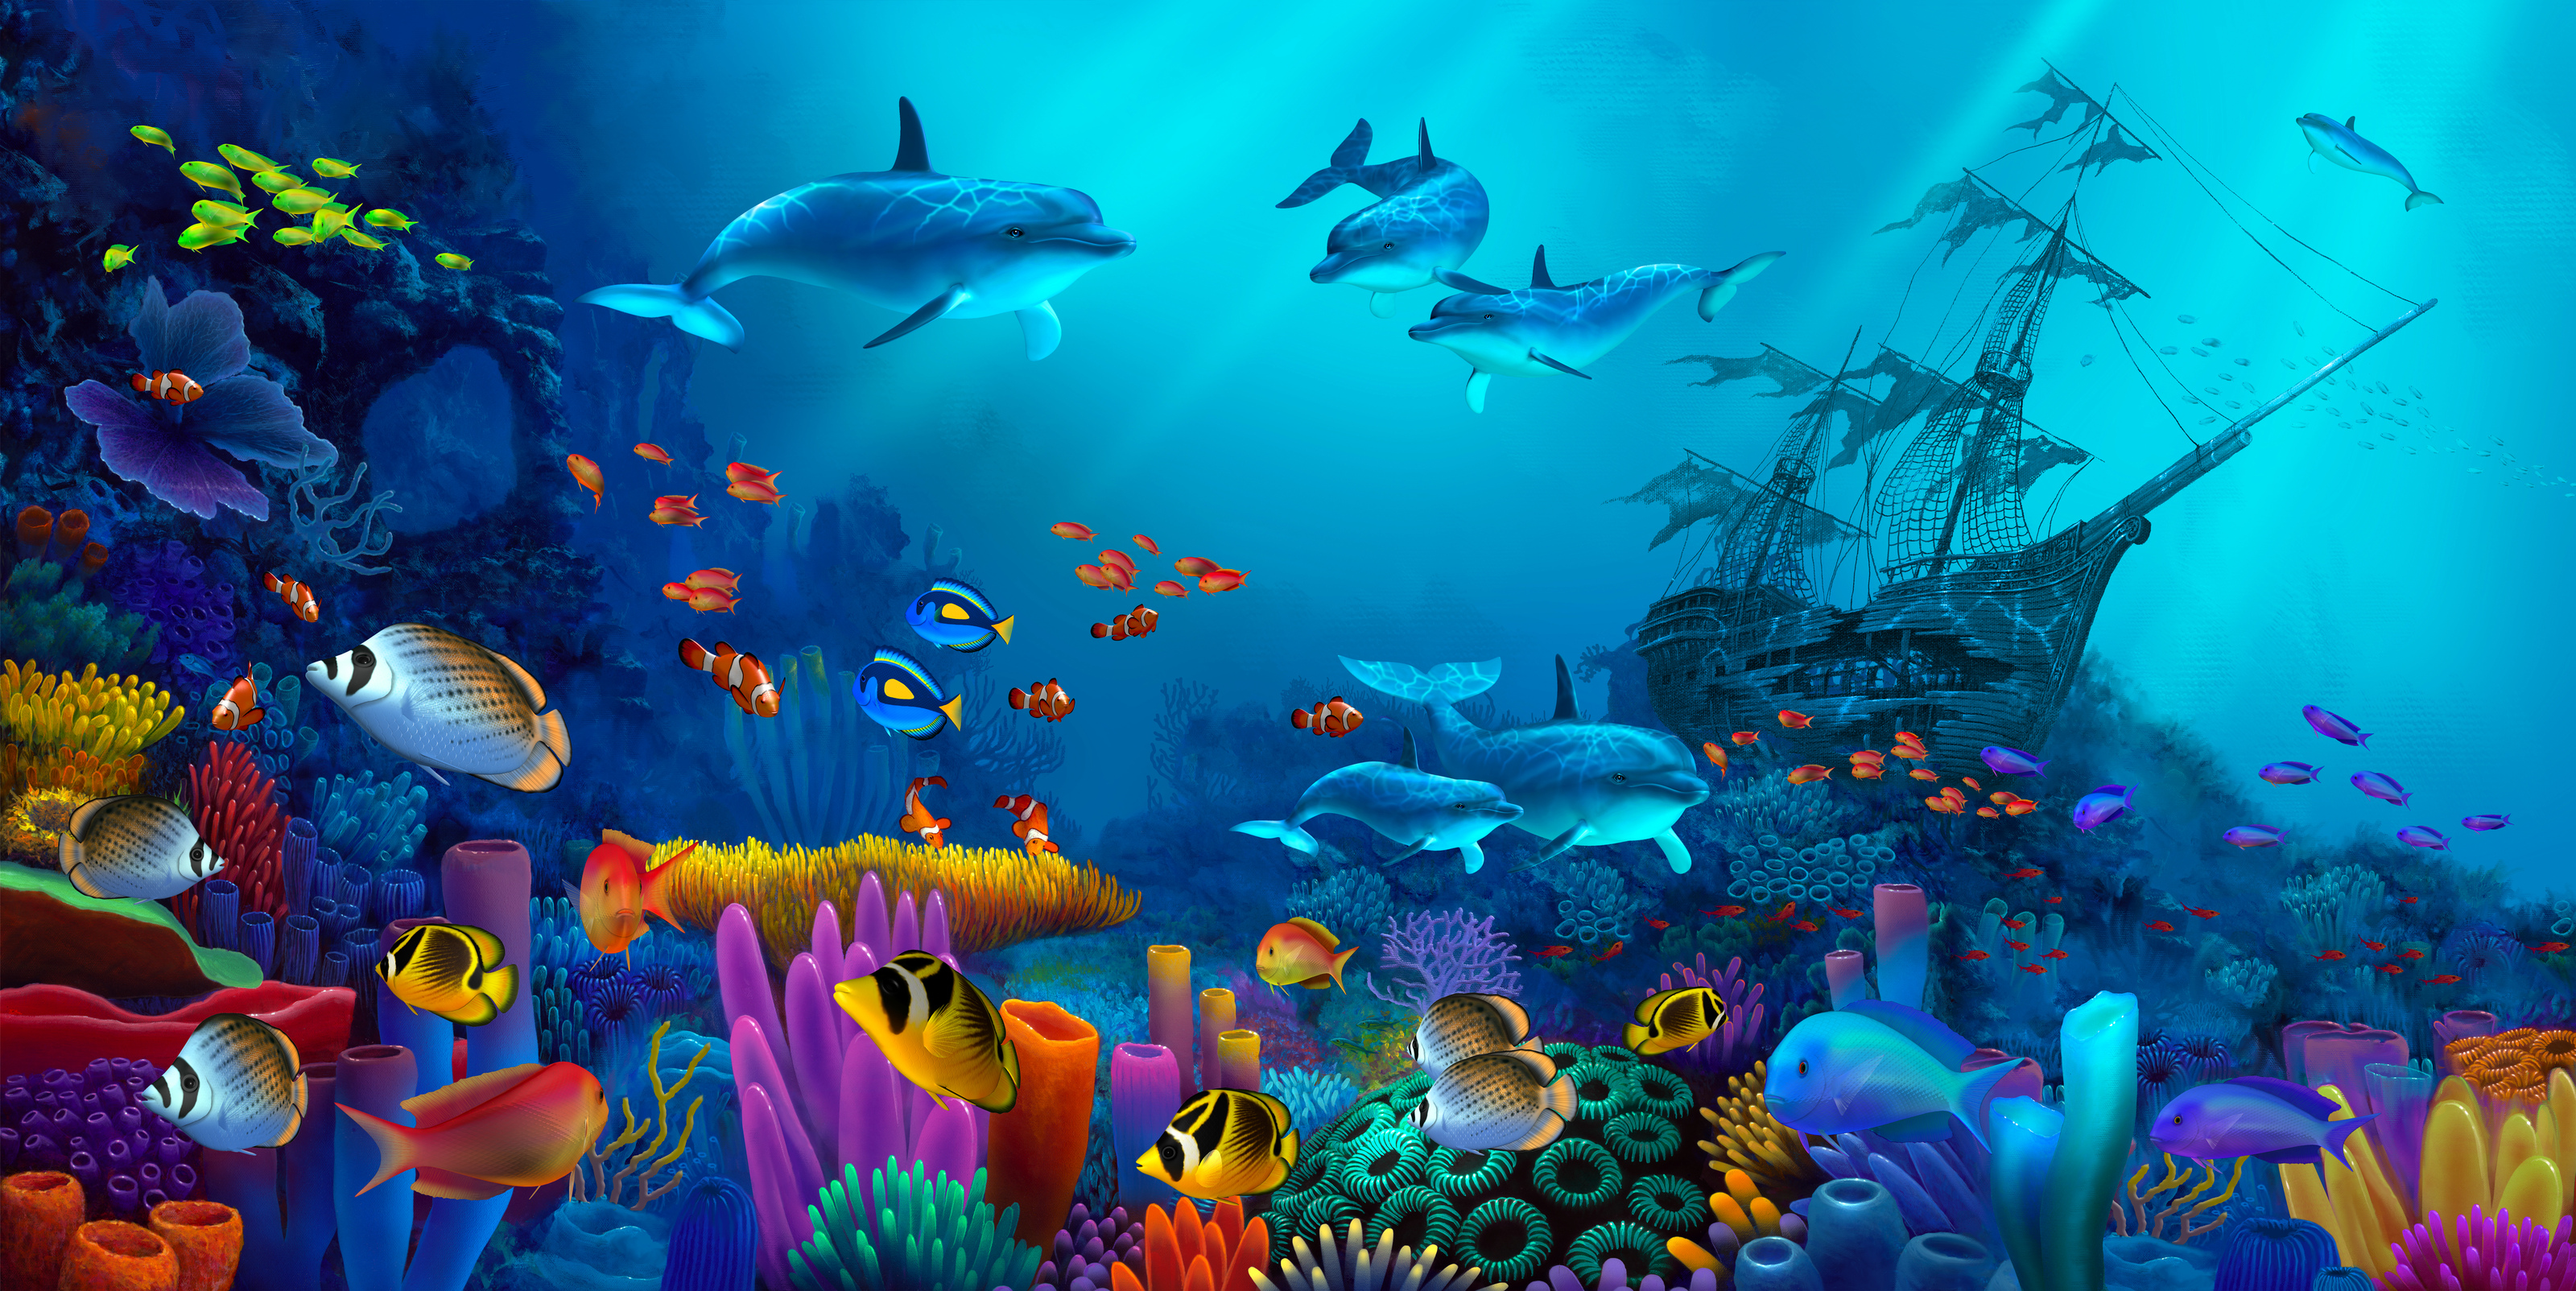 Ocean Wallpaper Photos, Download The BEST Free Ocean Wallpaper Stock Photos  & HD Images